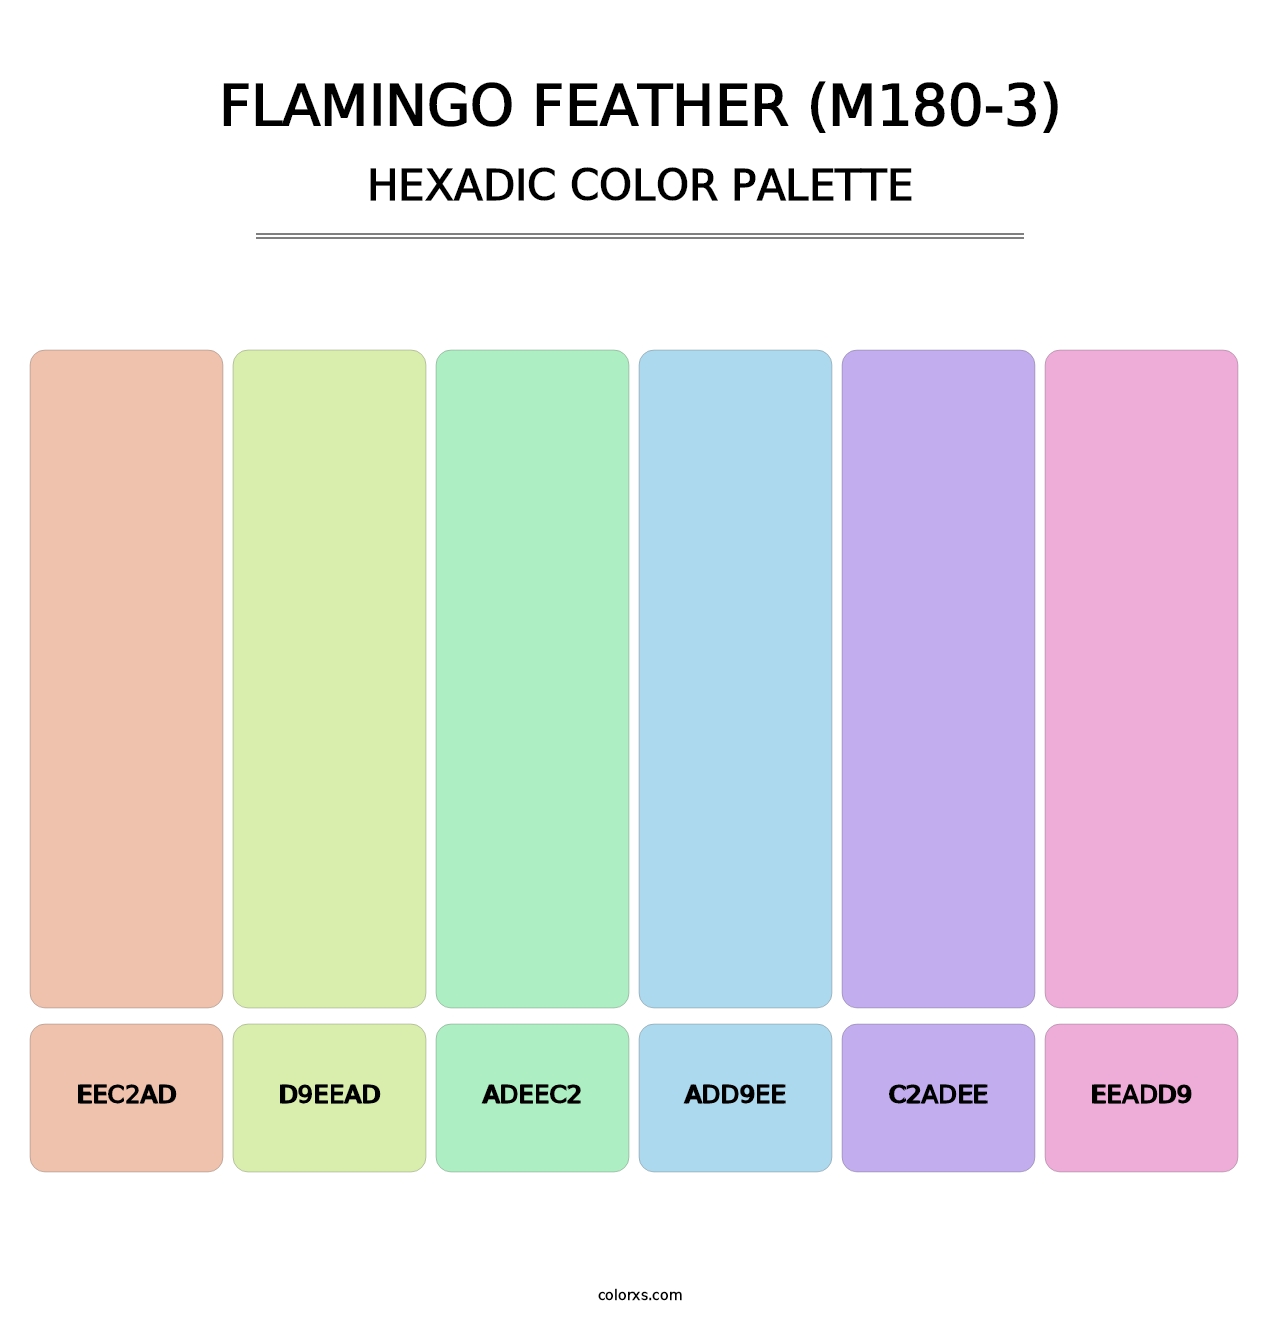 Flamingo Feather (M180-3) - Hexadic Color Palette